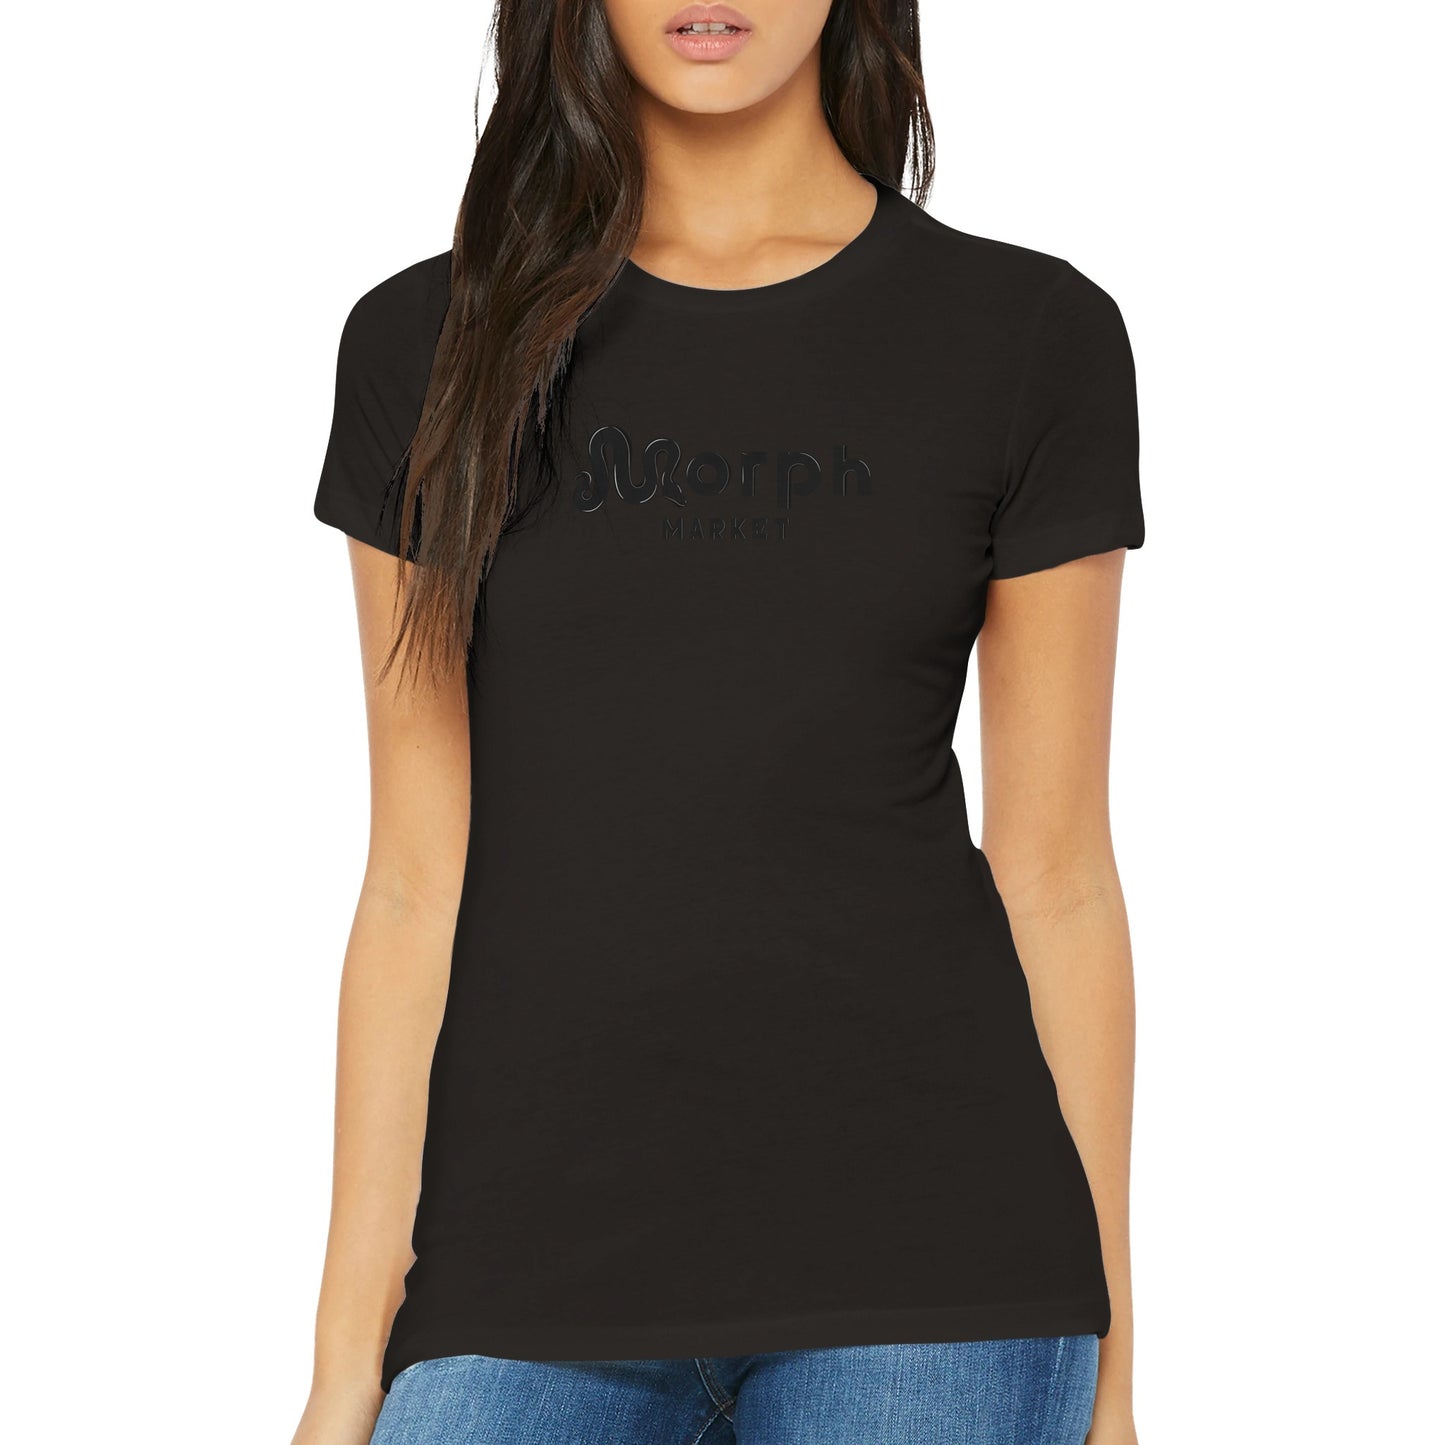 Morph Market (Dark) - Premium Womens Crewneck T-shirt